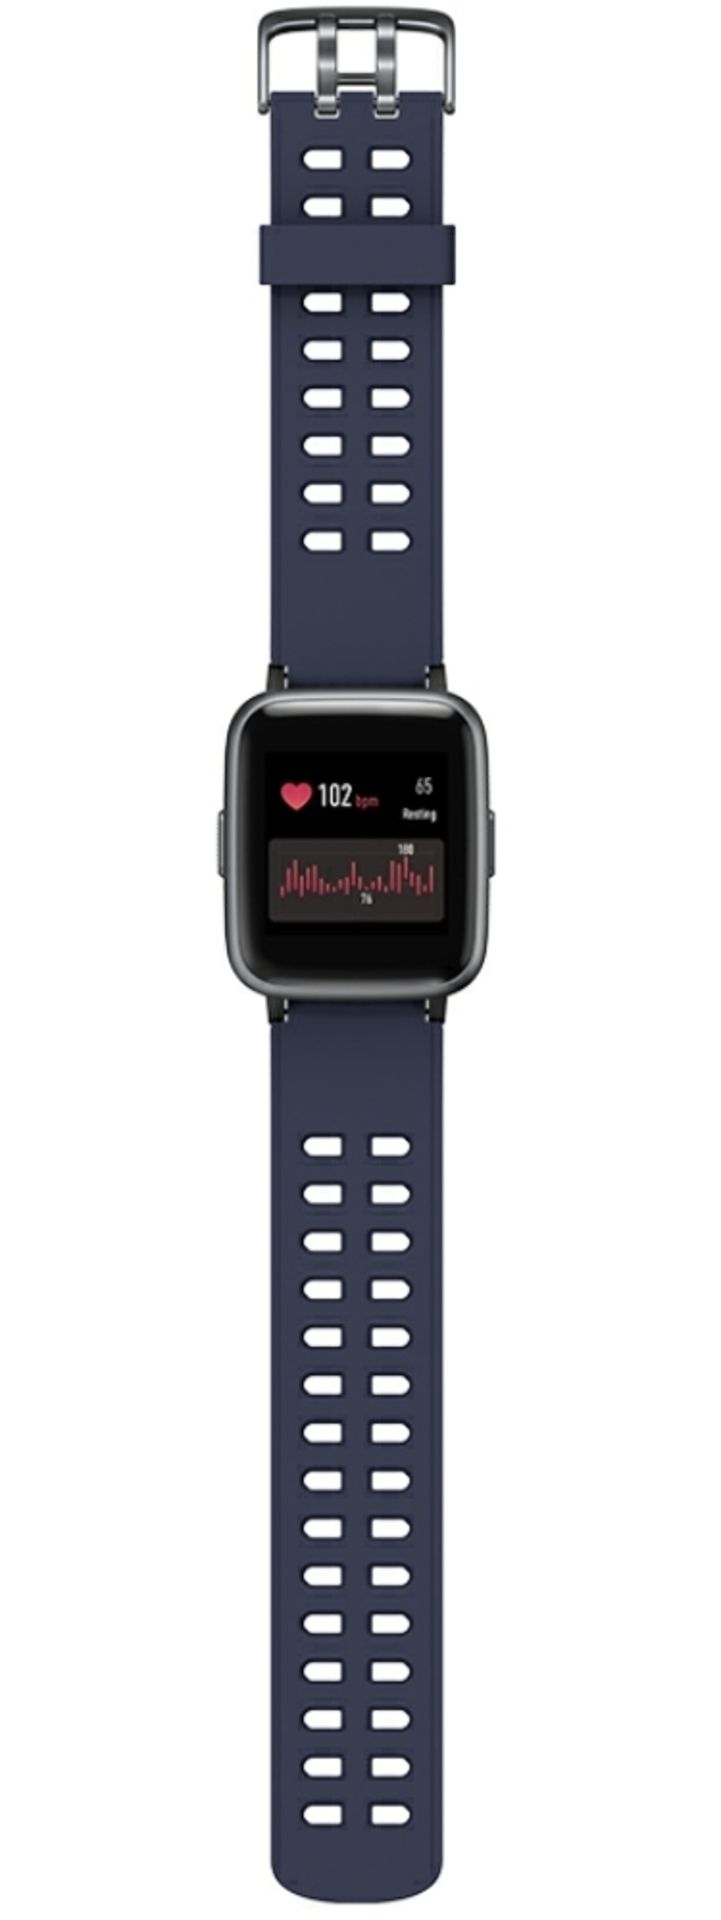 Brand New Unisex Fitness Tracker Watch ID205 Blue/Grey Strap - Image 10 of 33